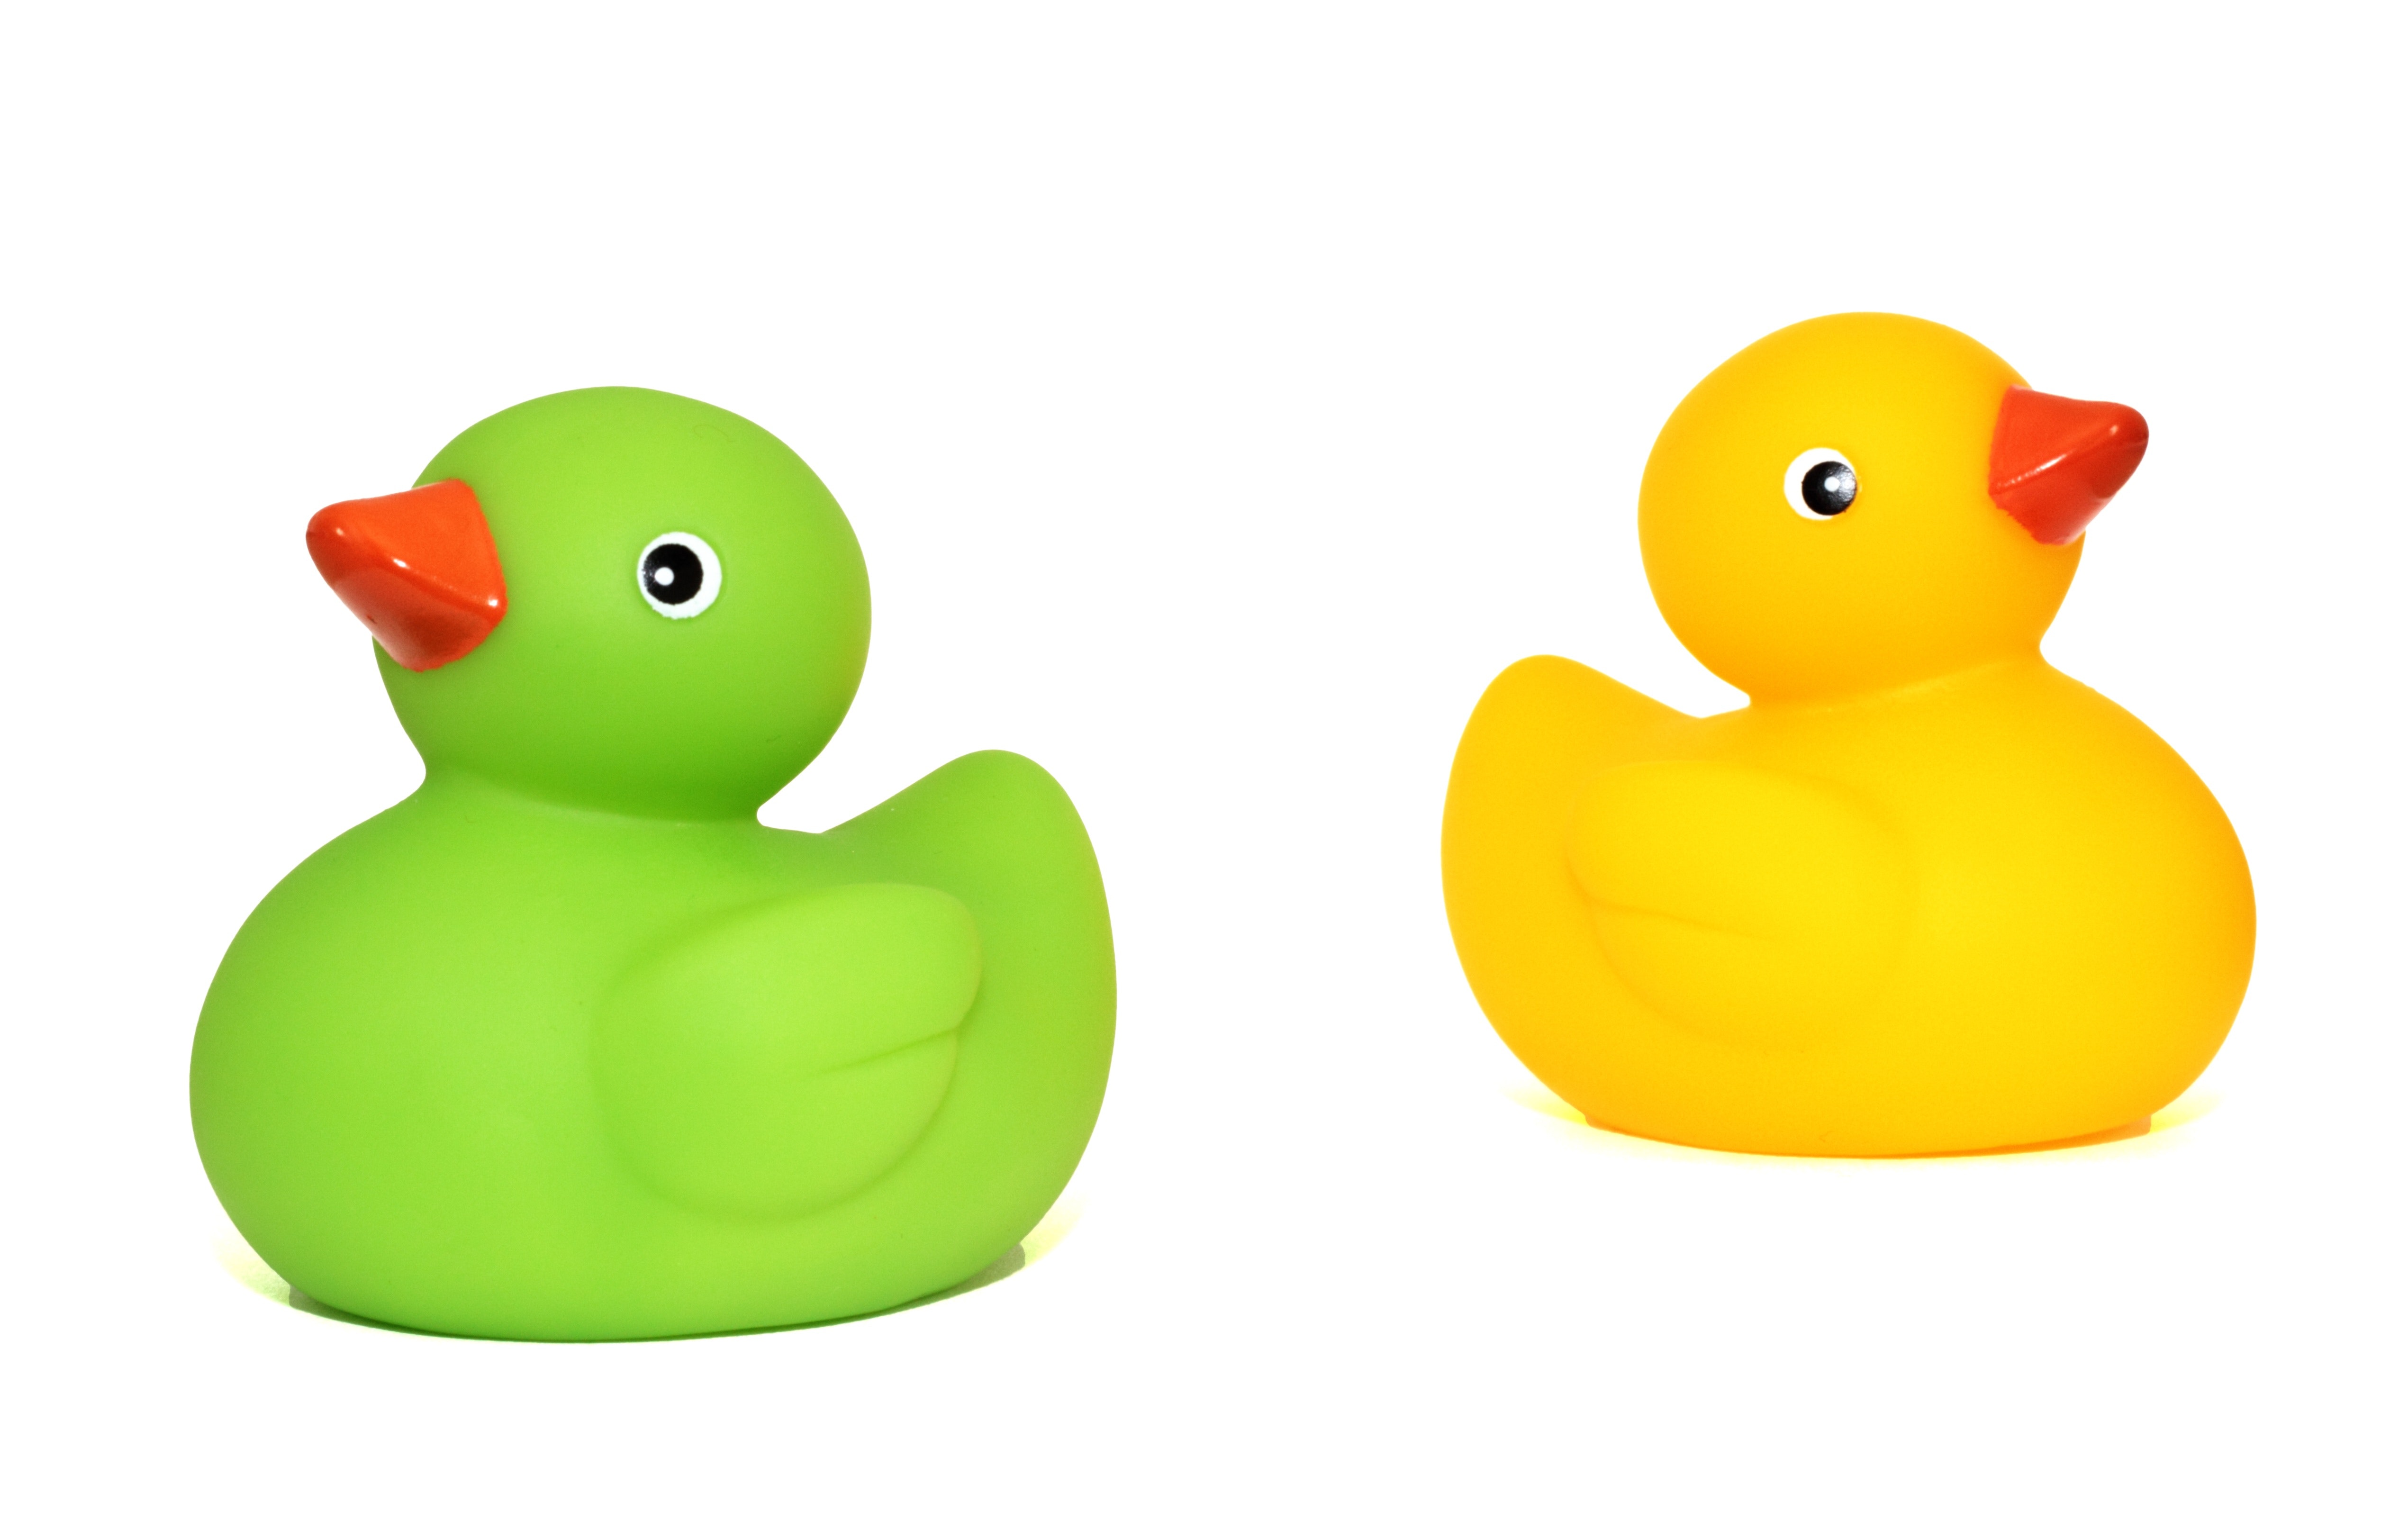 Toy Ducks